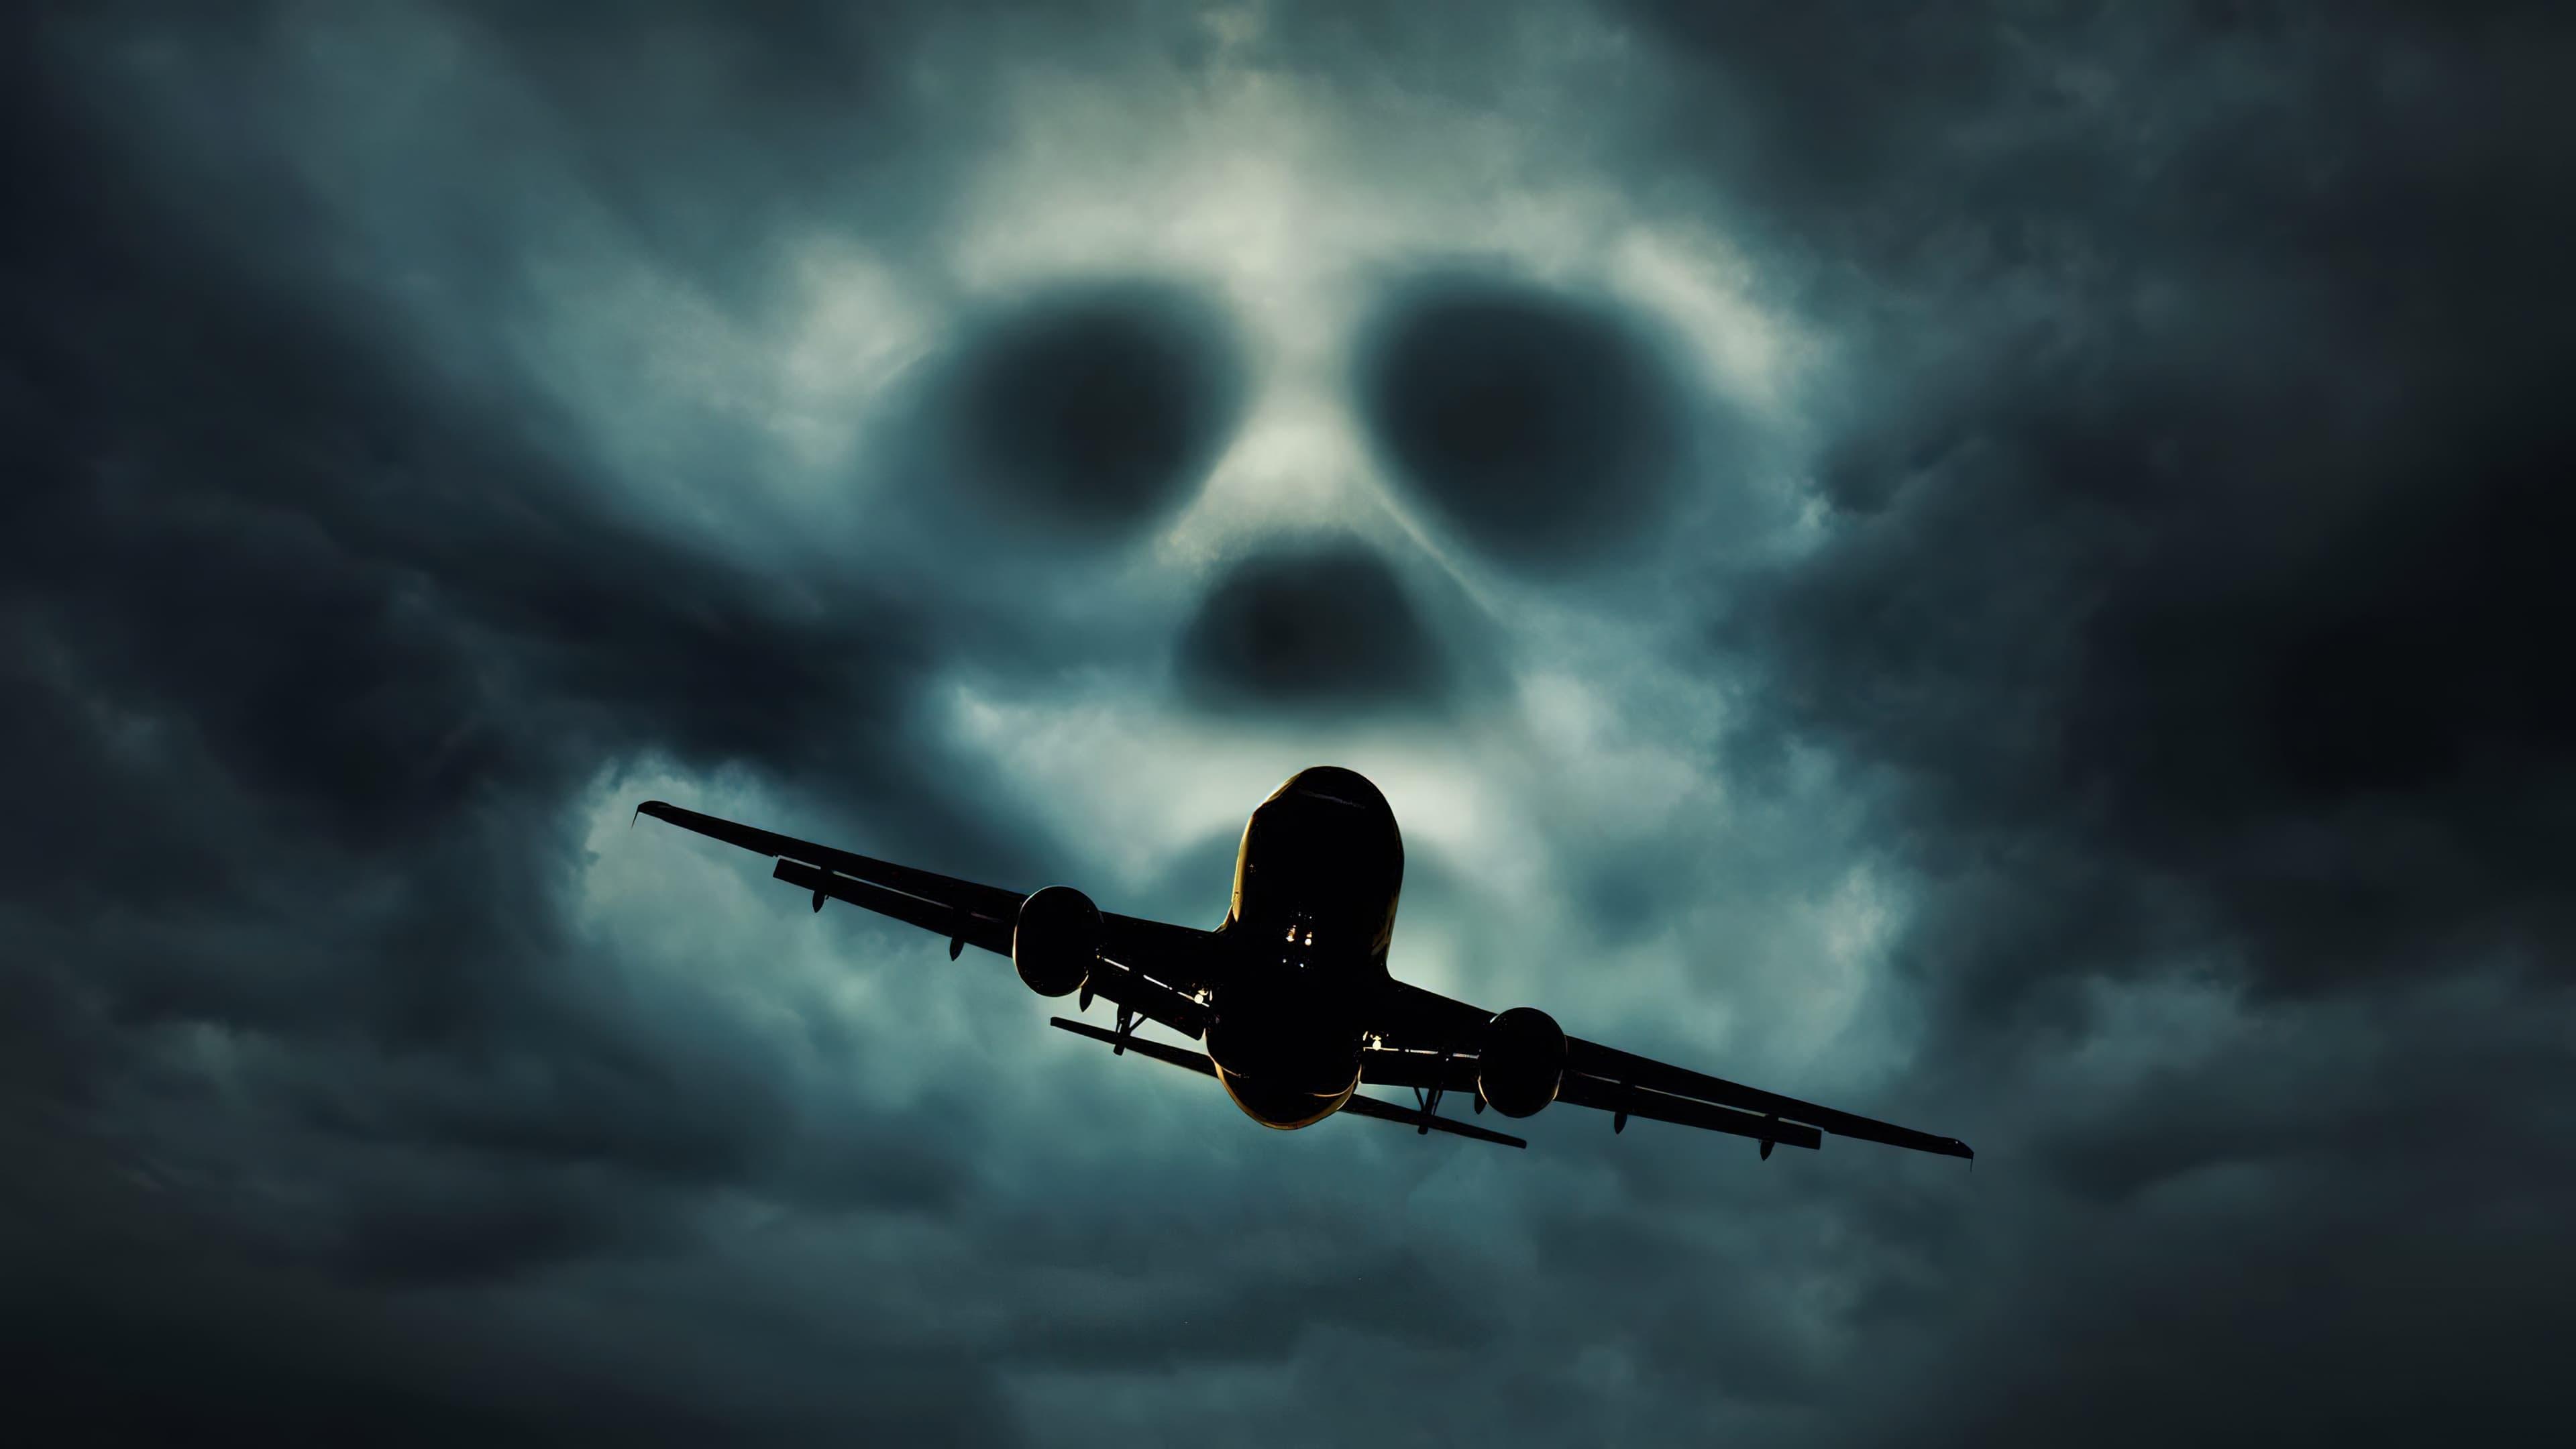 Ghosts of Flight 401 backdrop